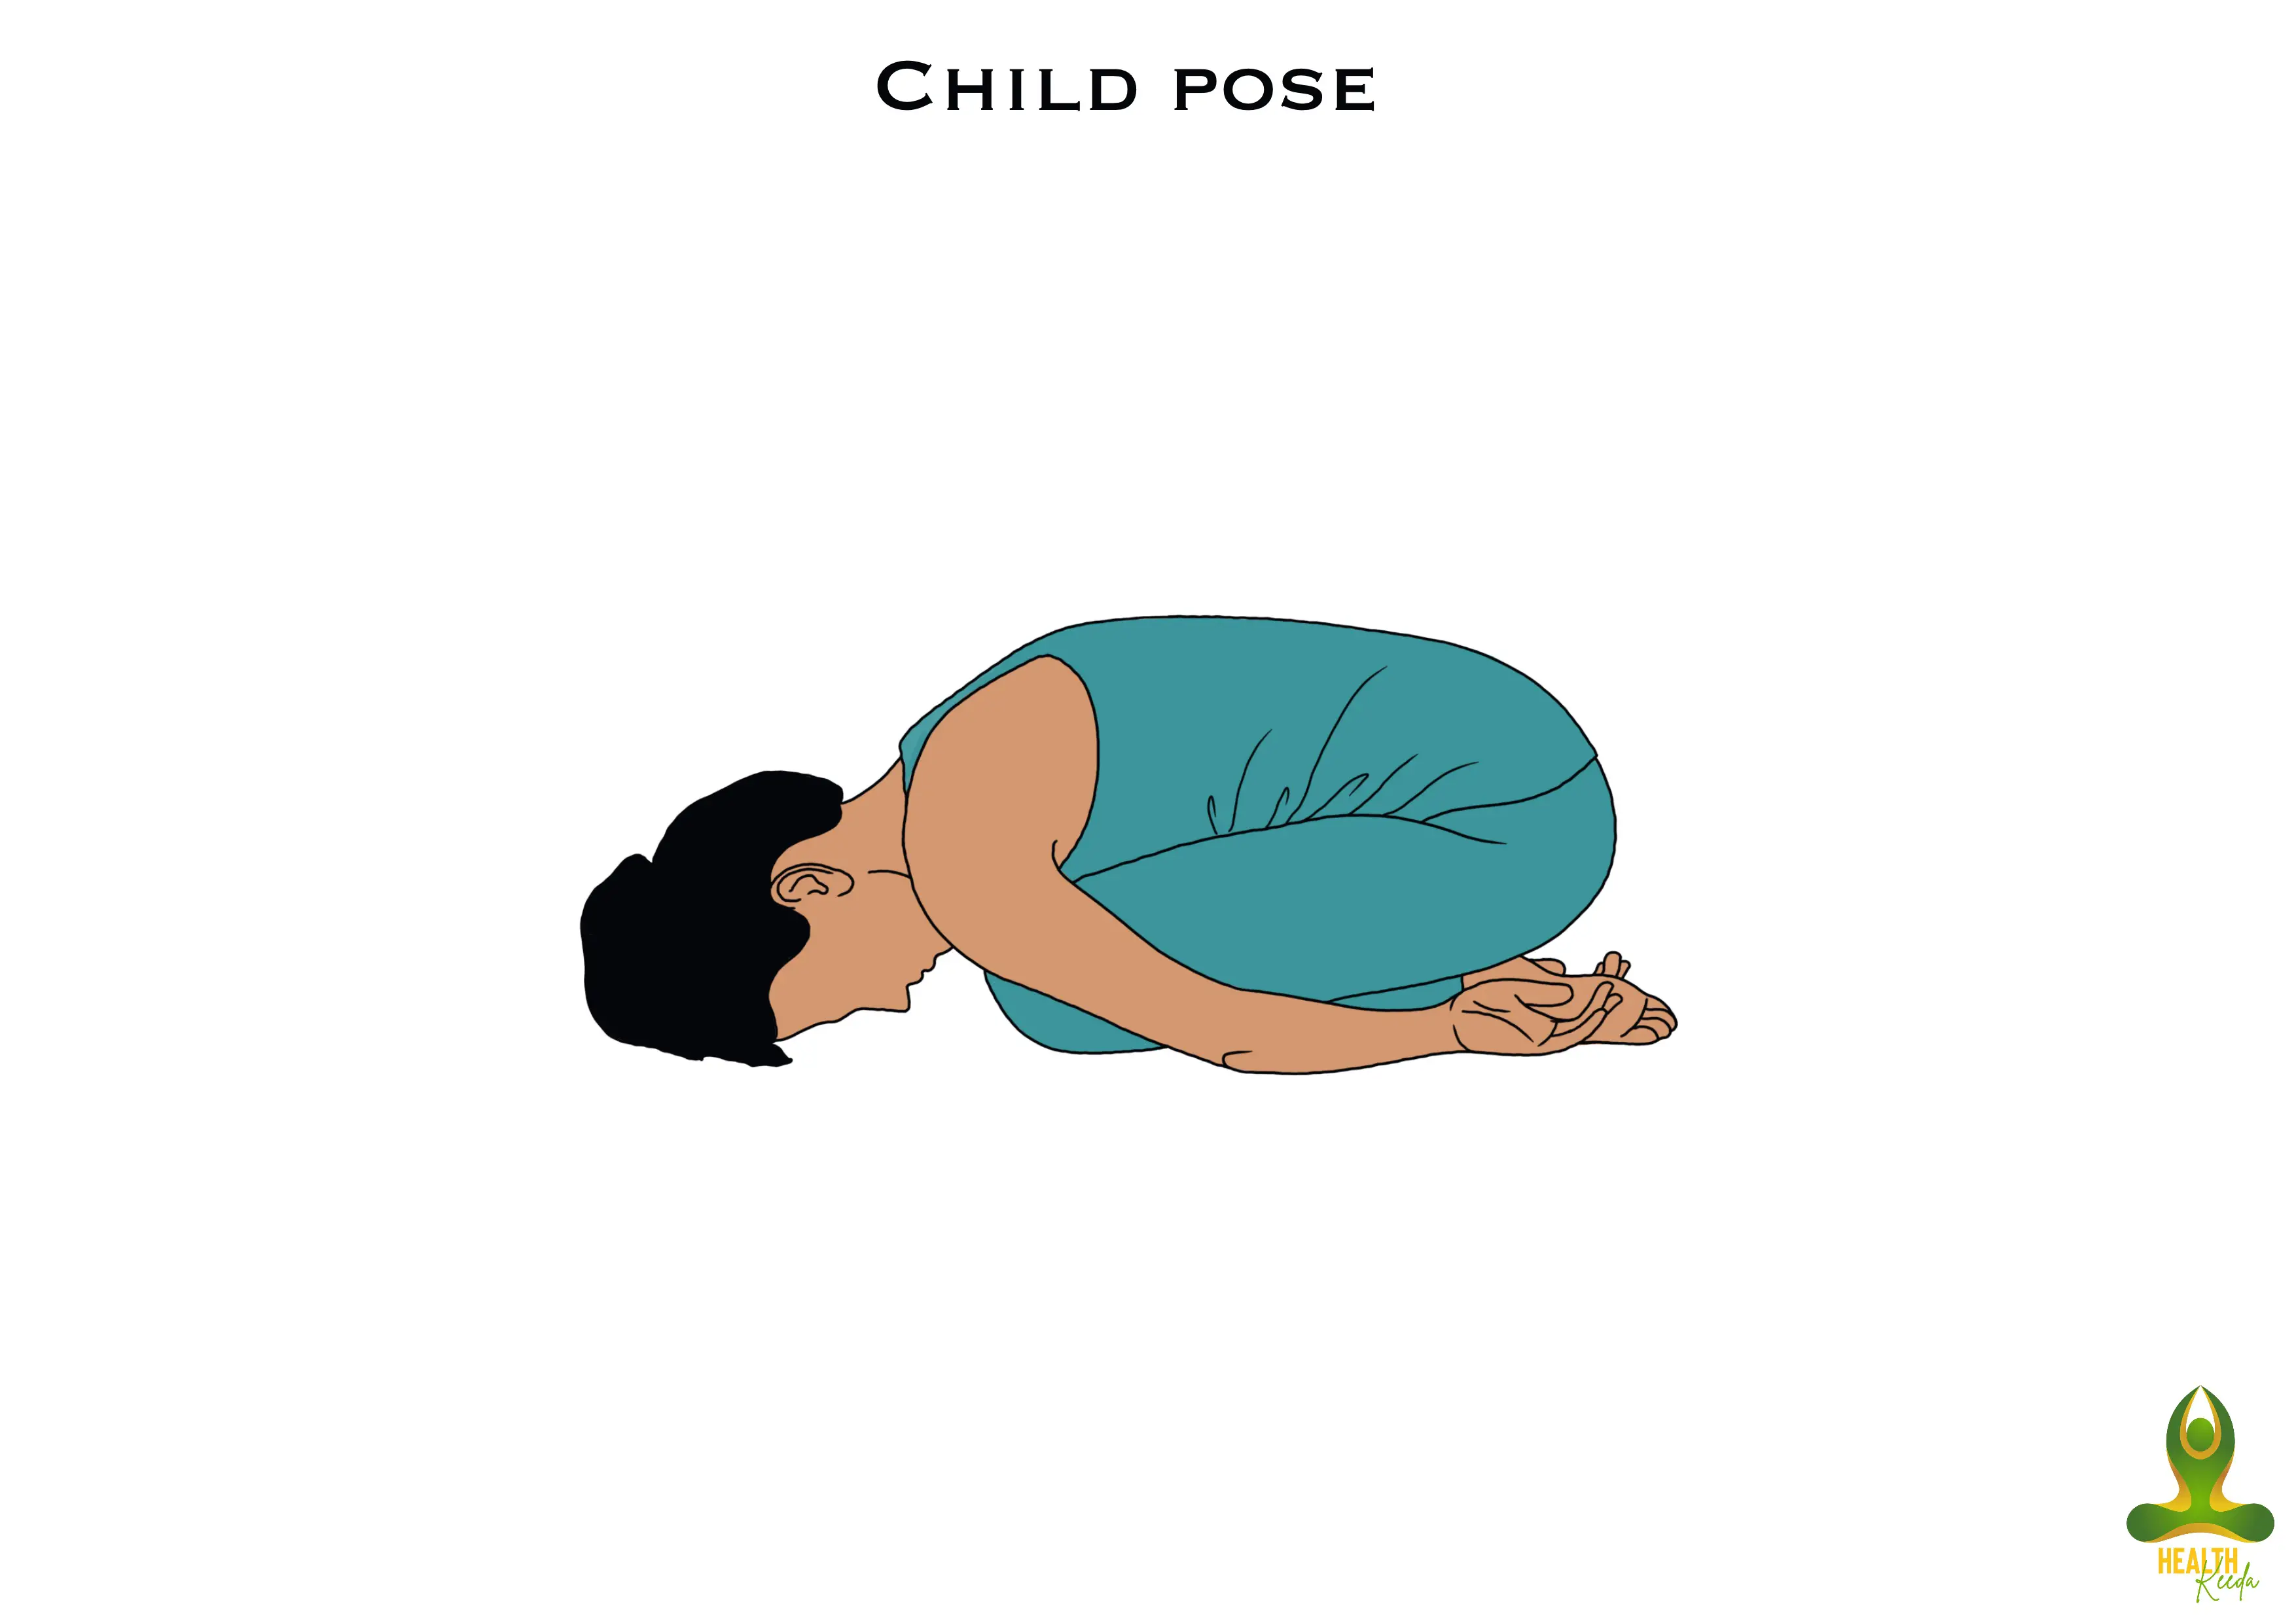 Shishuasana or Child pose - migraine yoga treatment